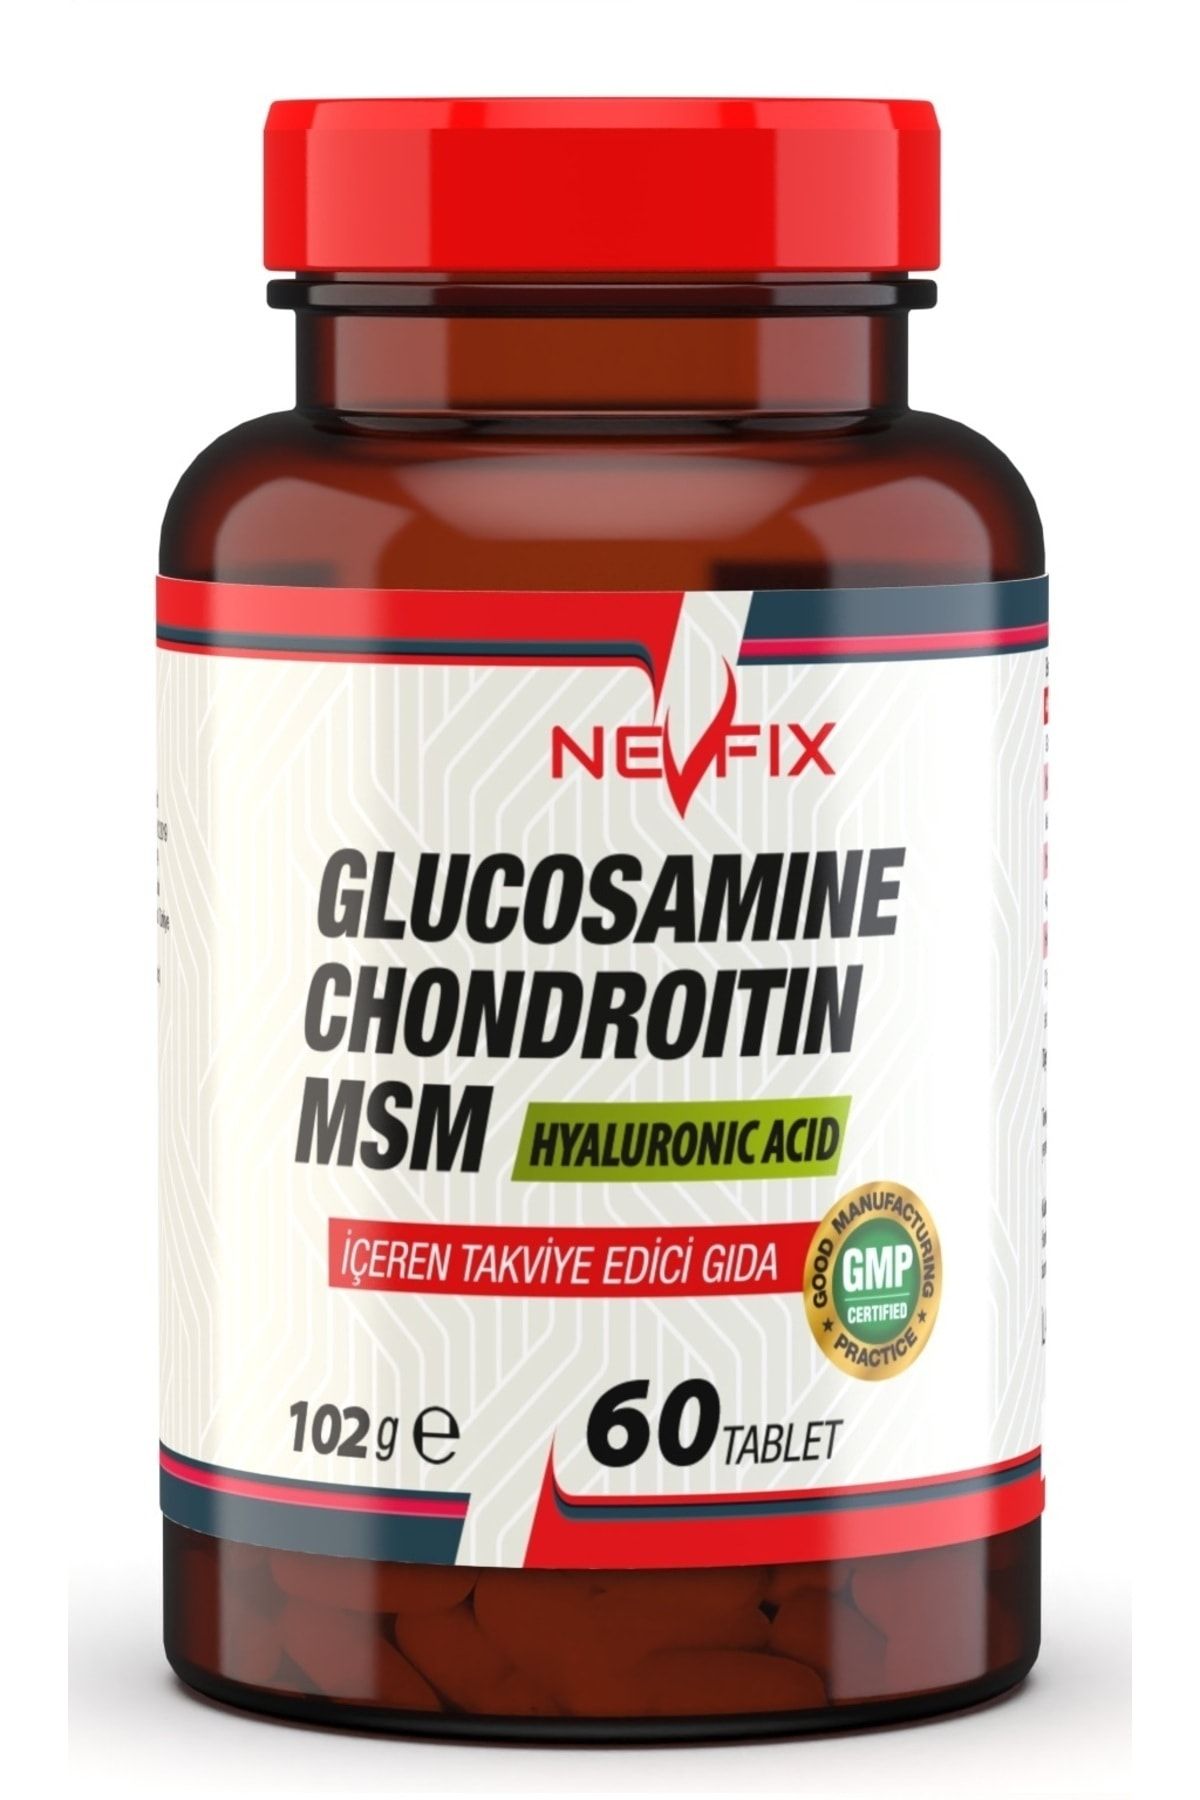 Nevfix Glucosamine Chondroitin Msm Hyaluronic Acid 60 Tablet